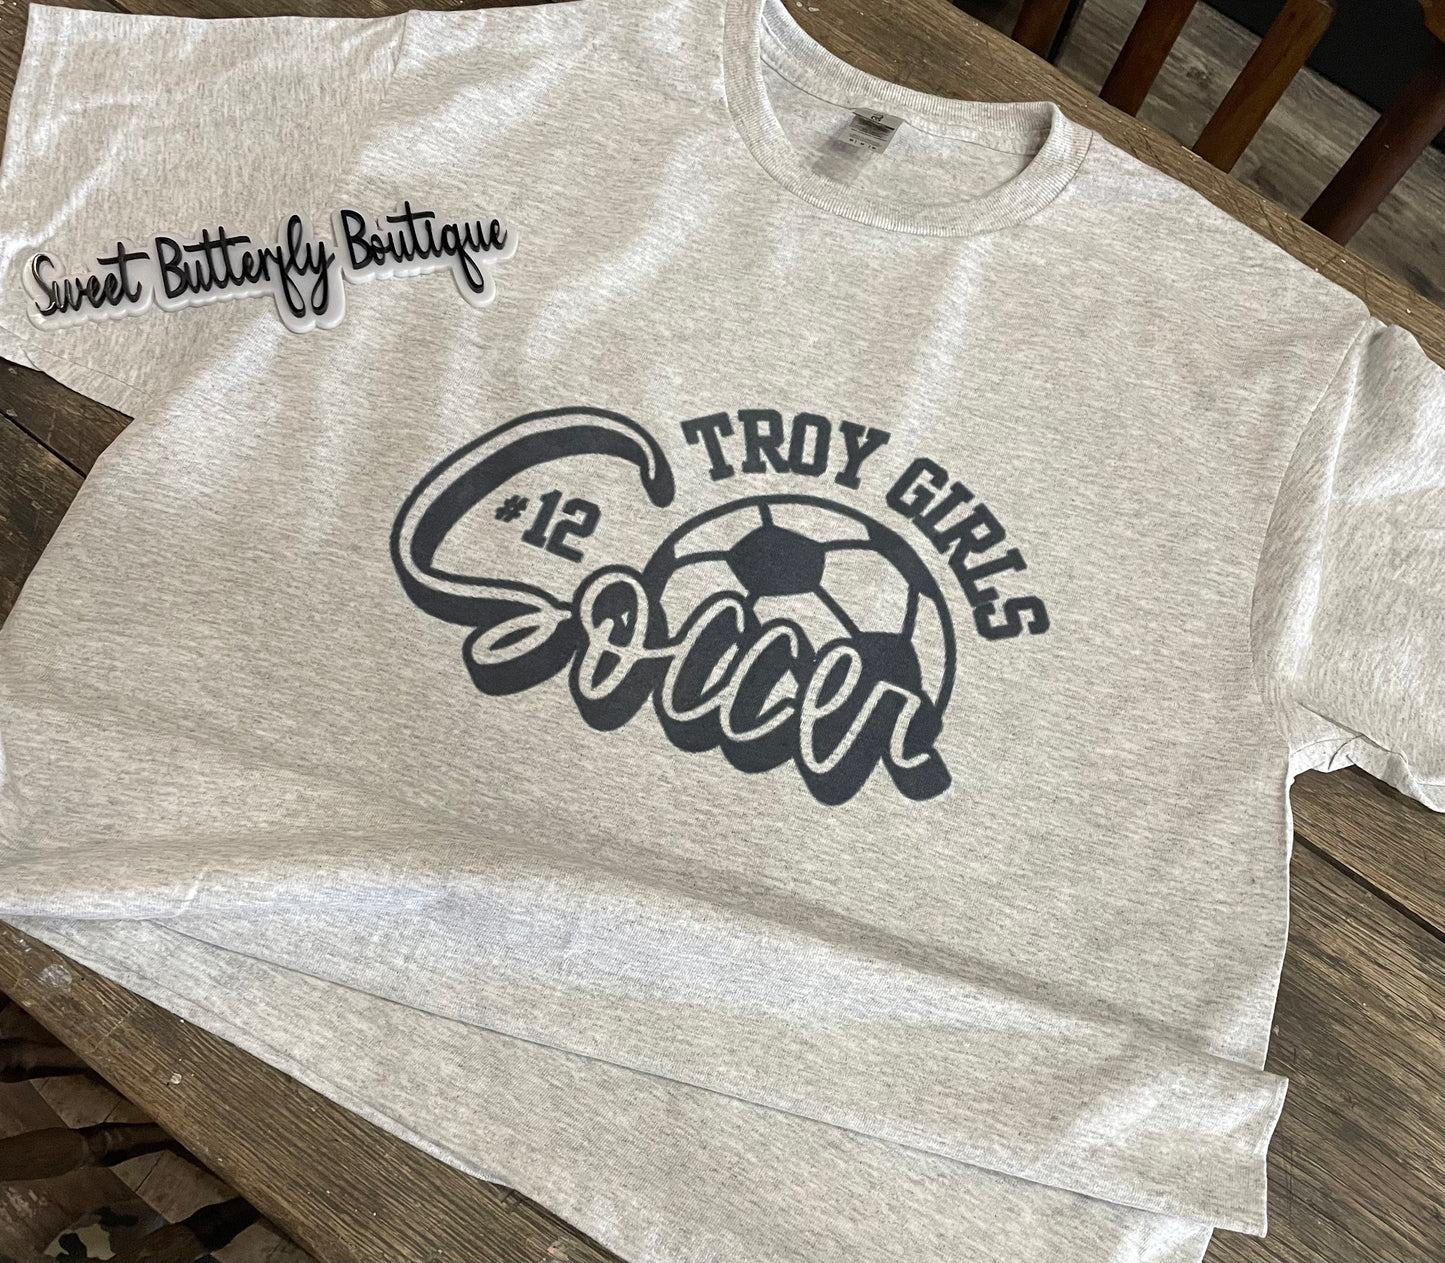 Troy Girls Soccer Teeshirt